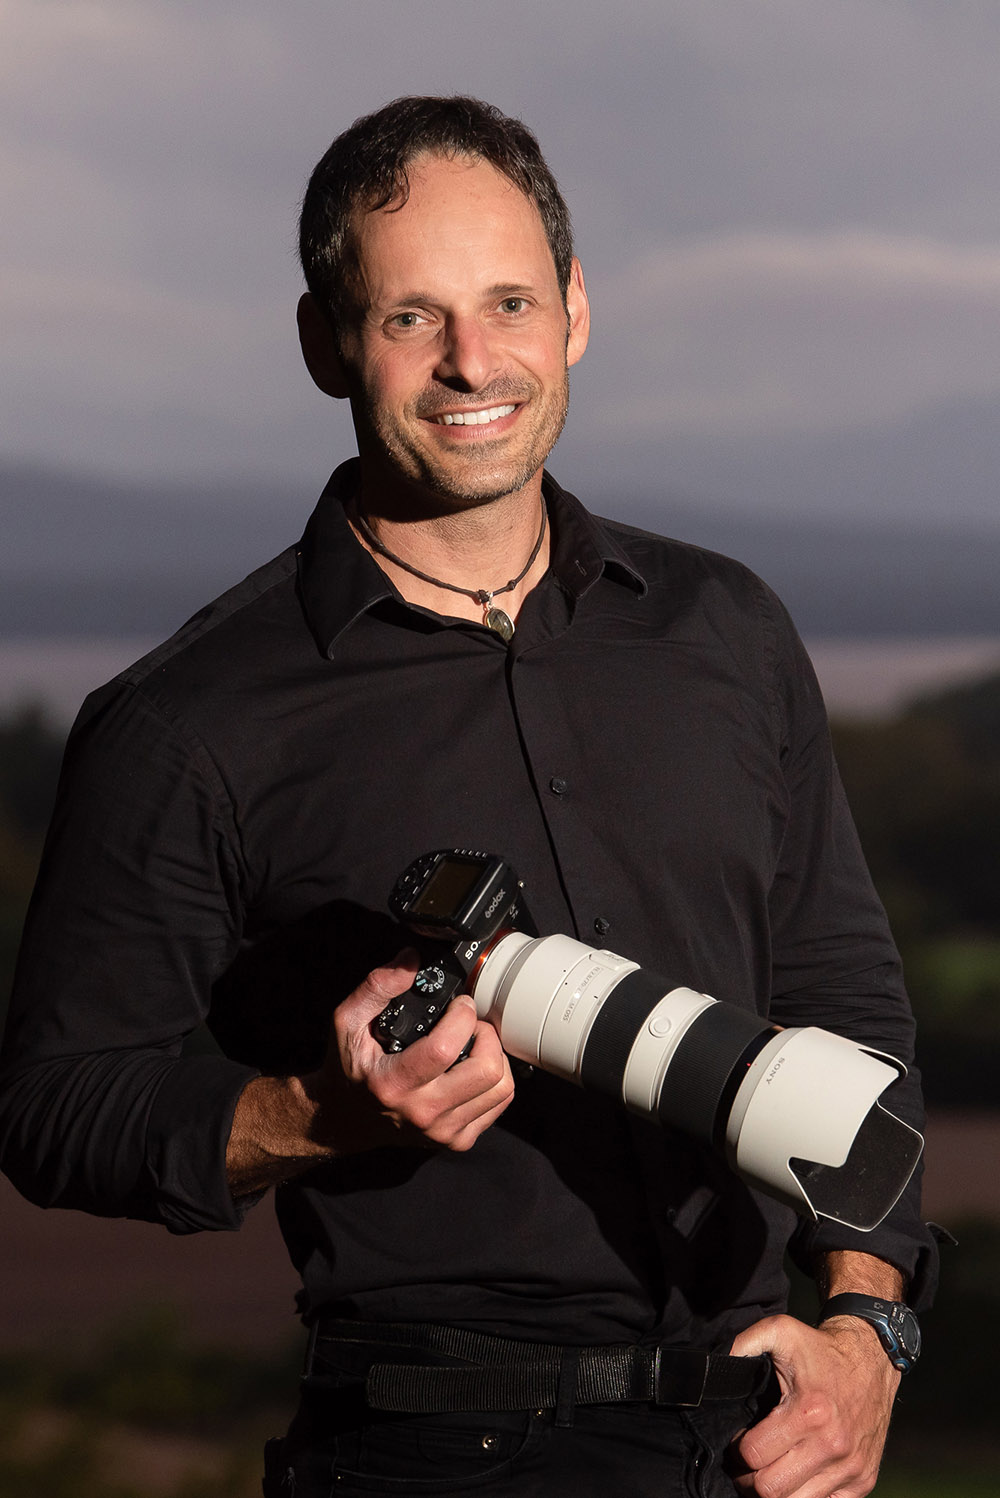 Vermont wedding photographer and videographer